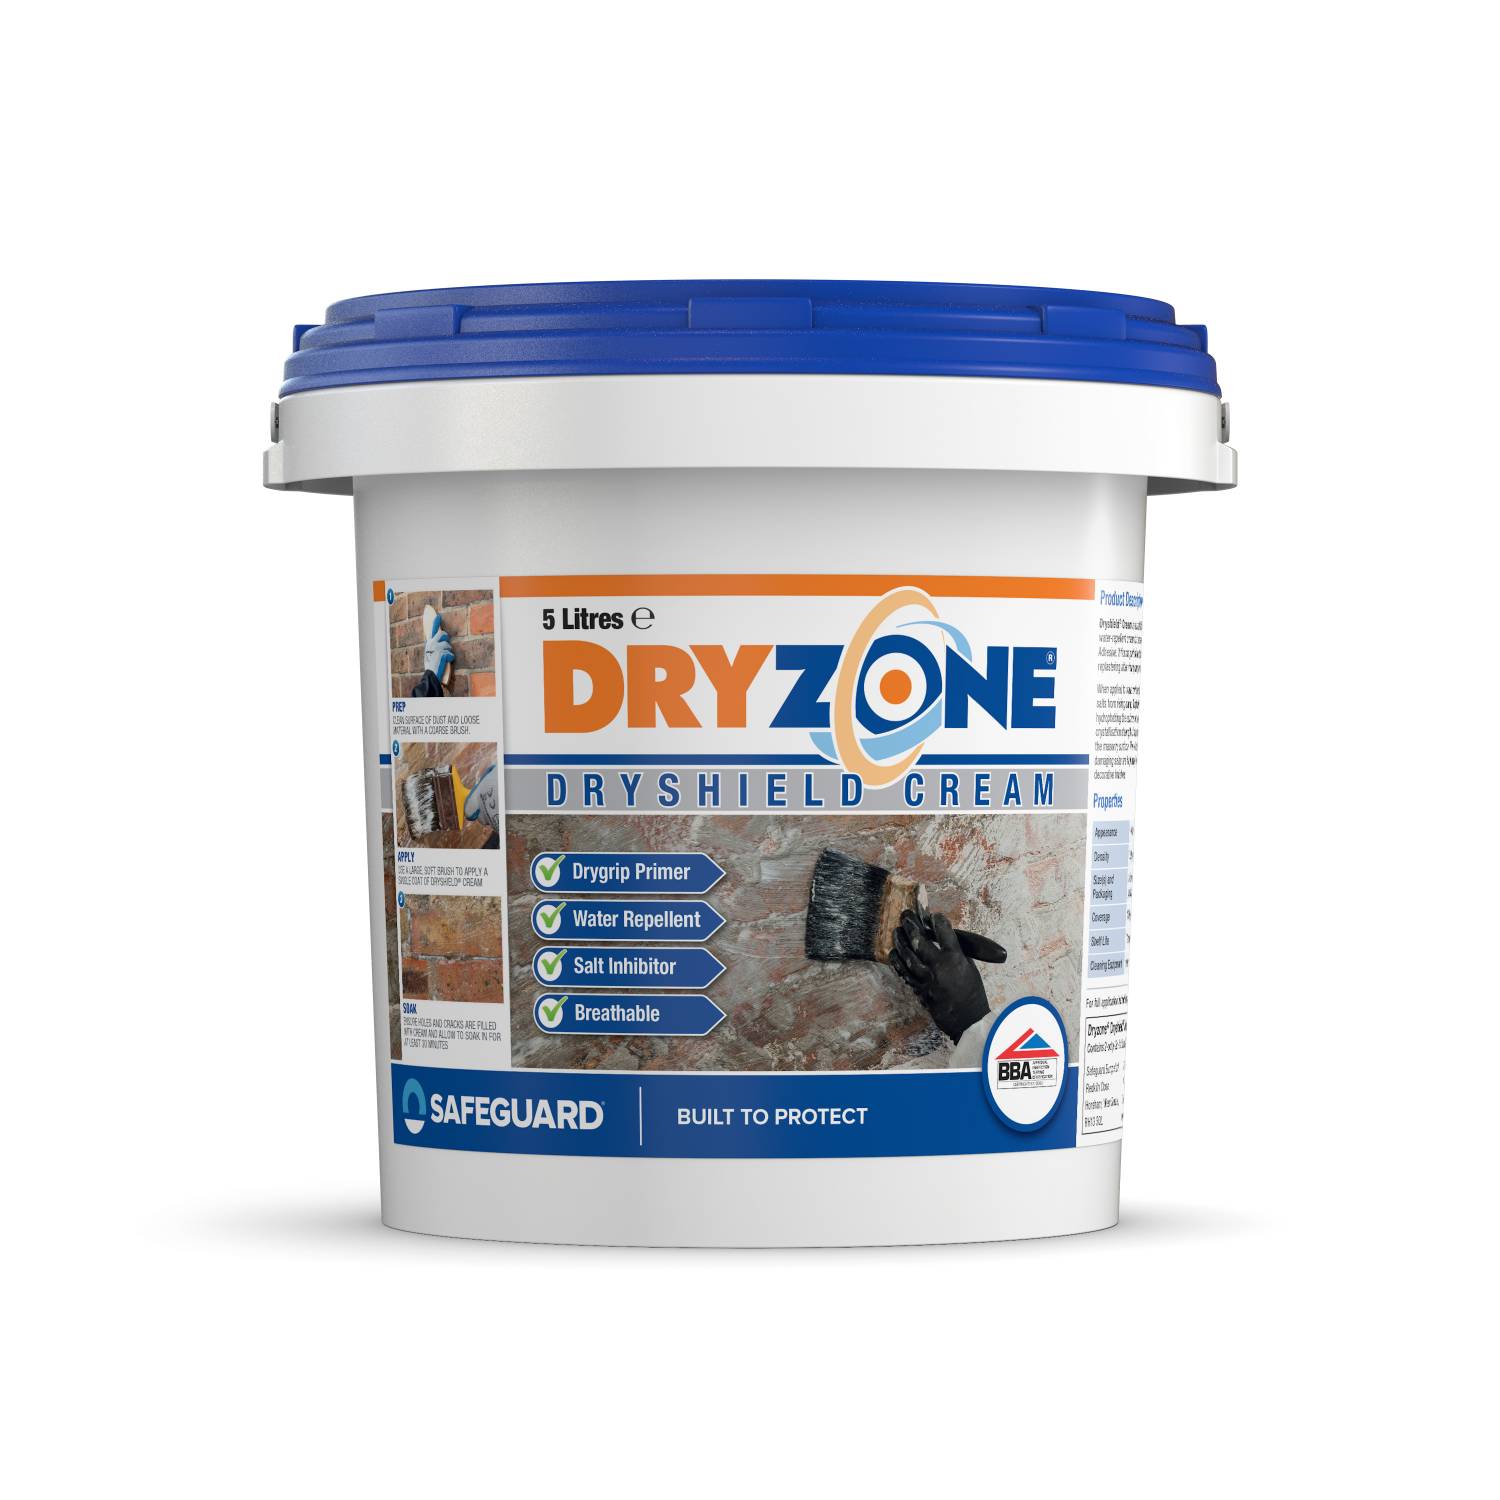 Dryshield Cream - Breathable, Salt-Resistant, Water-Repellent Primer for Drygrip Adhesive 